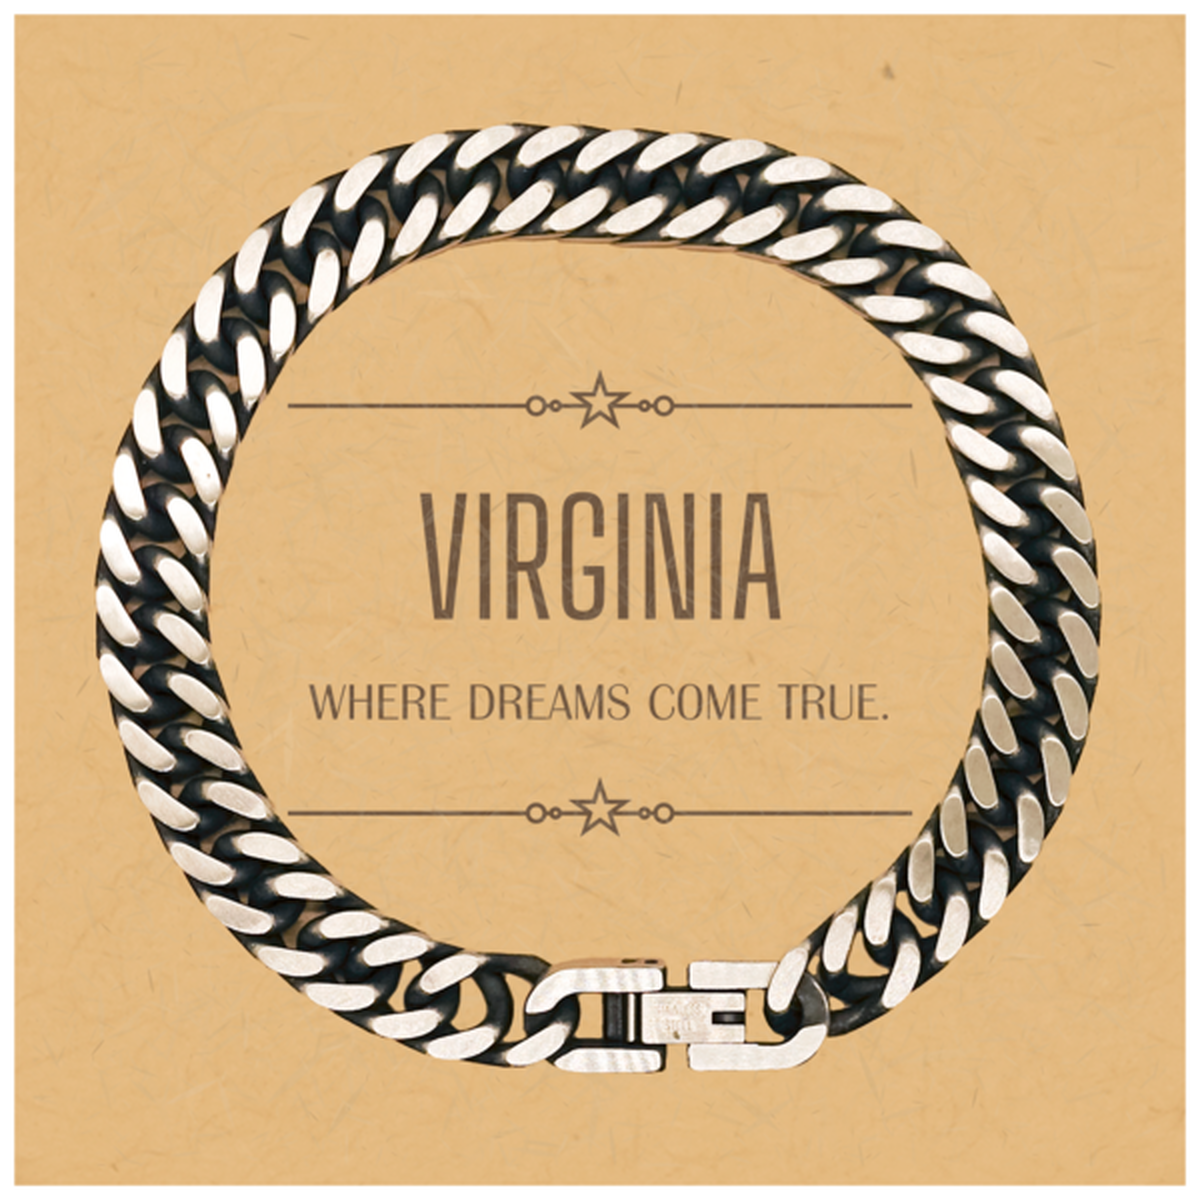 Love Virginia State Cuban Link Chain Bracelet, Virginia Where dreams come true, Birthday Christmas Inspirational Gifts For Virginia Men, Women, Friends